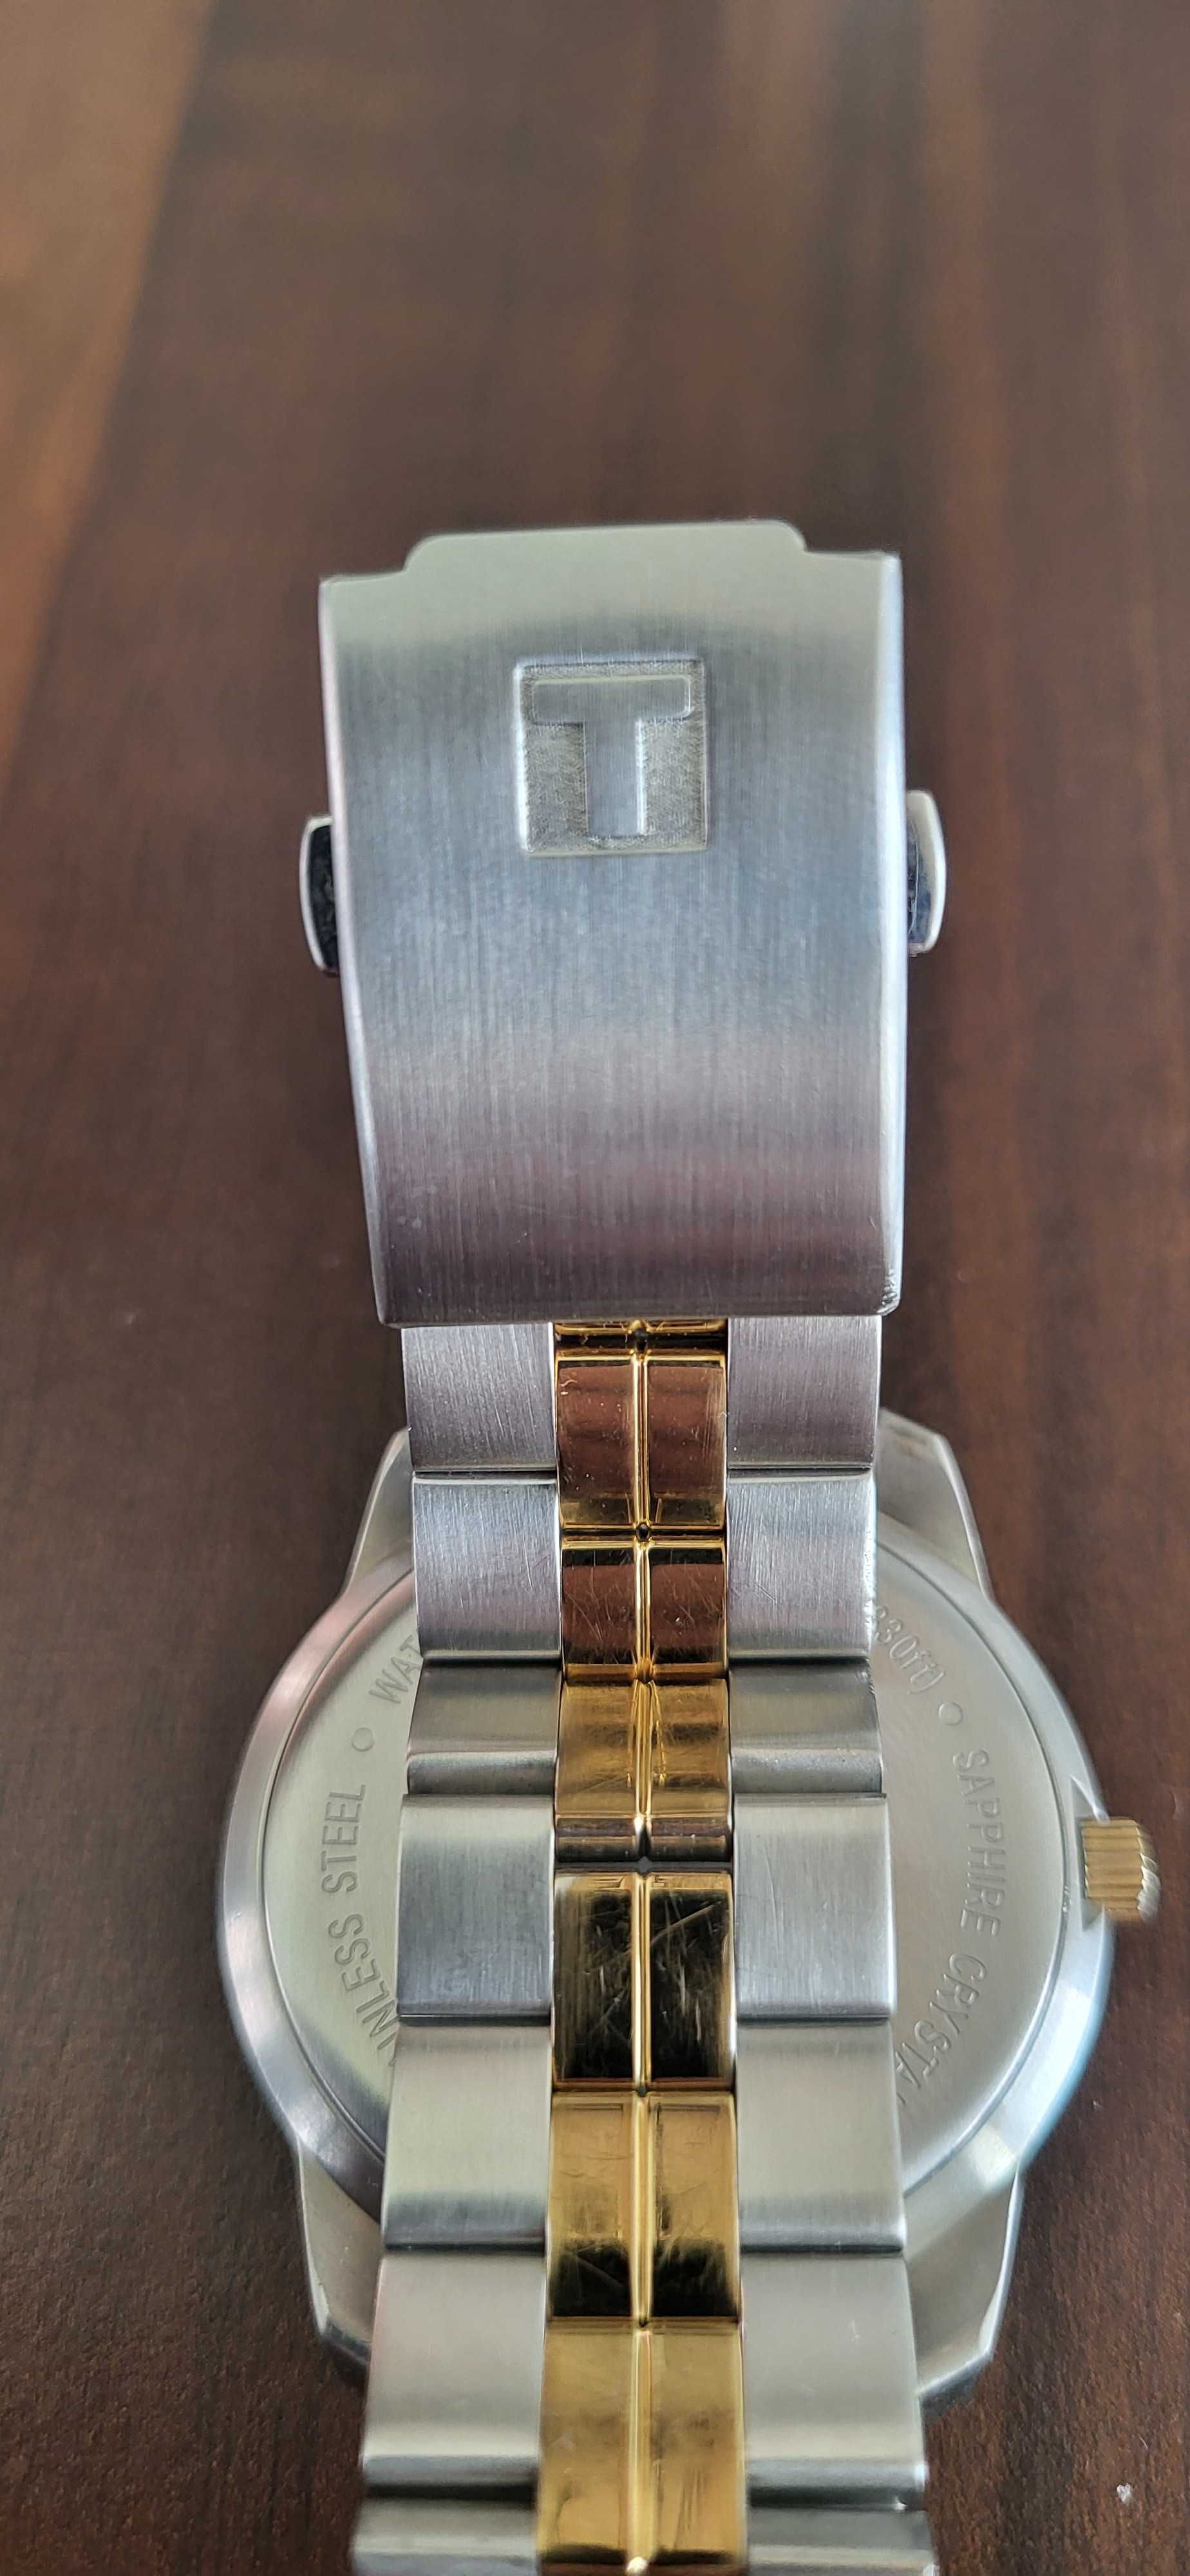 Zegarek męski Tissot PR100 bikolor kwarcowy